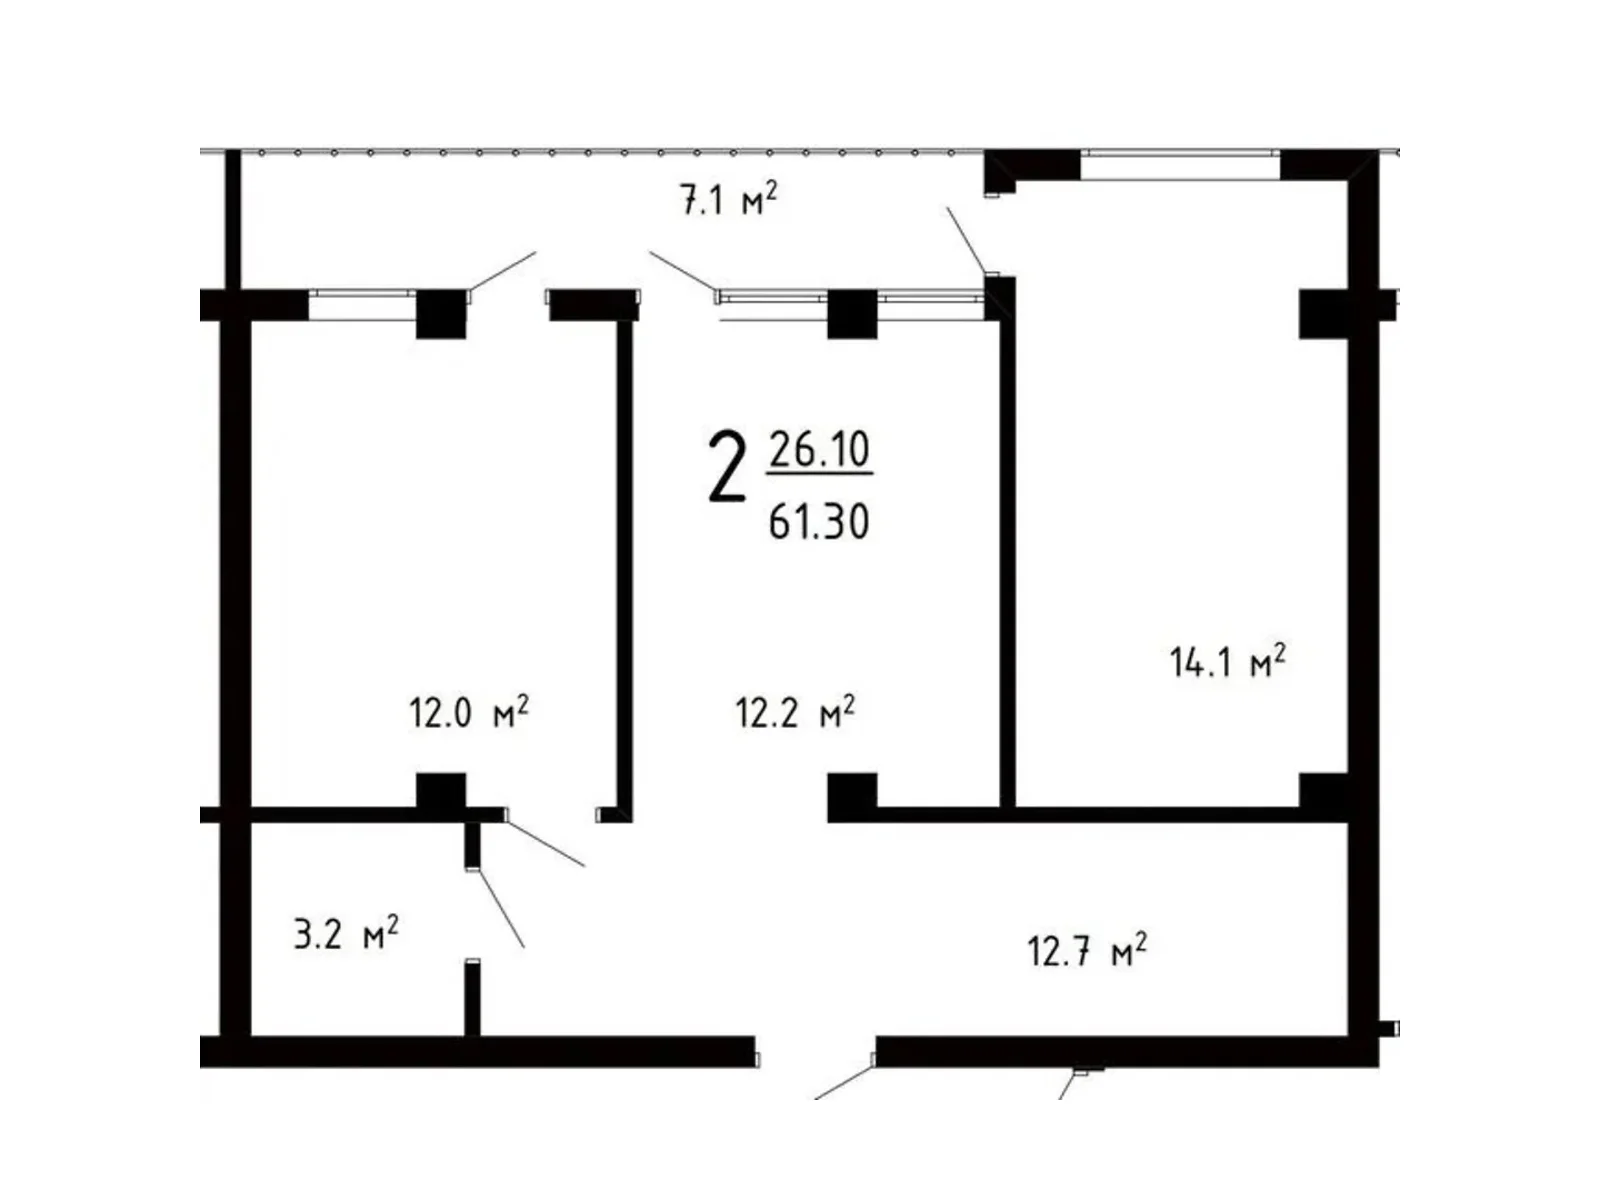 Продается 2-комнатная квартира 61.3 кв. м в Годилове, цена: 64365 $ - фото 1